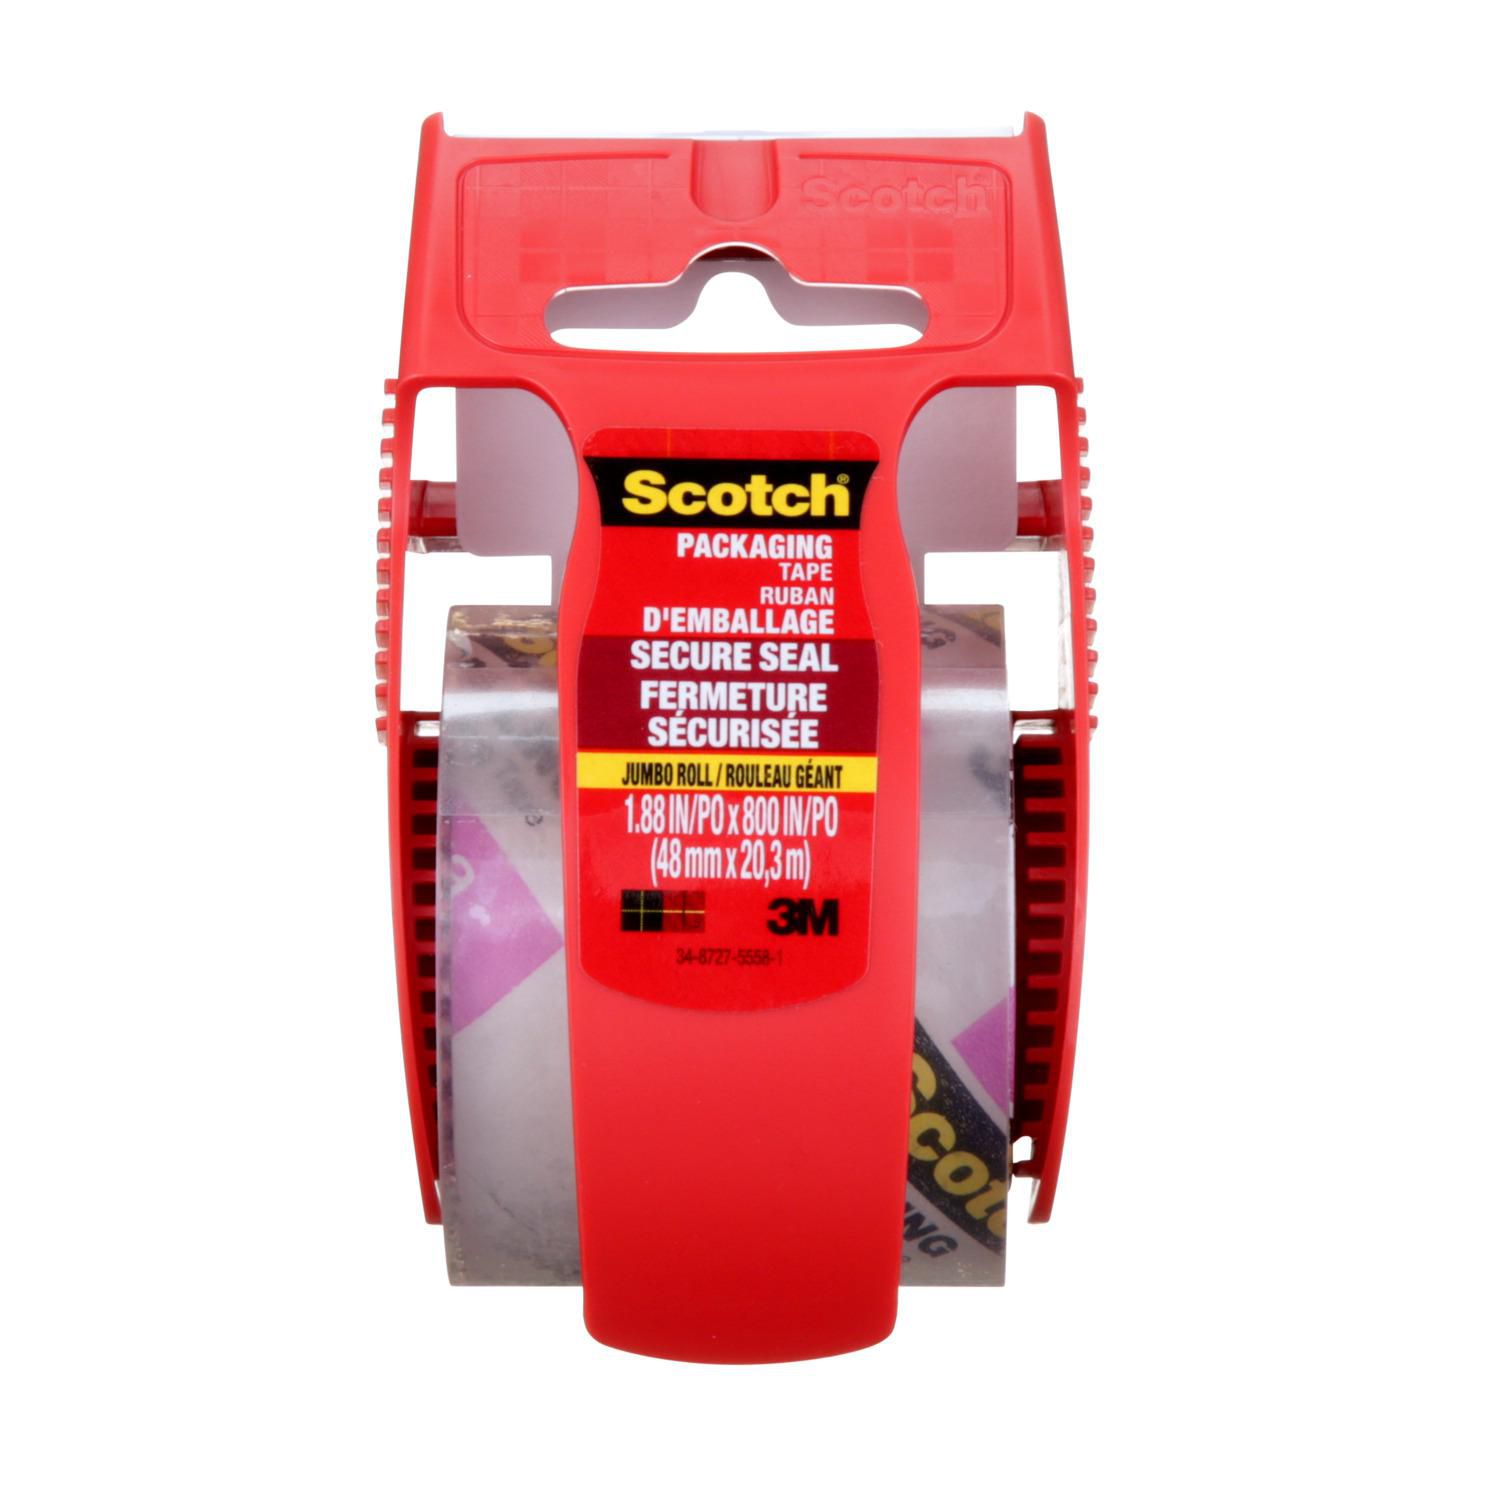 Scotch Ruban d'emballage Box Lock 48 mm x 20.3 m, 6 rouleaux